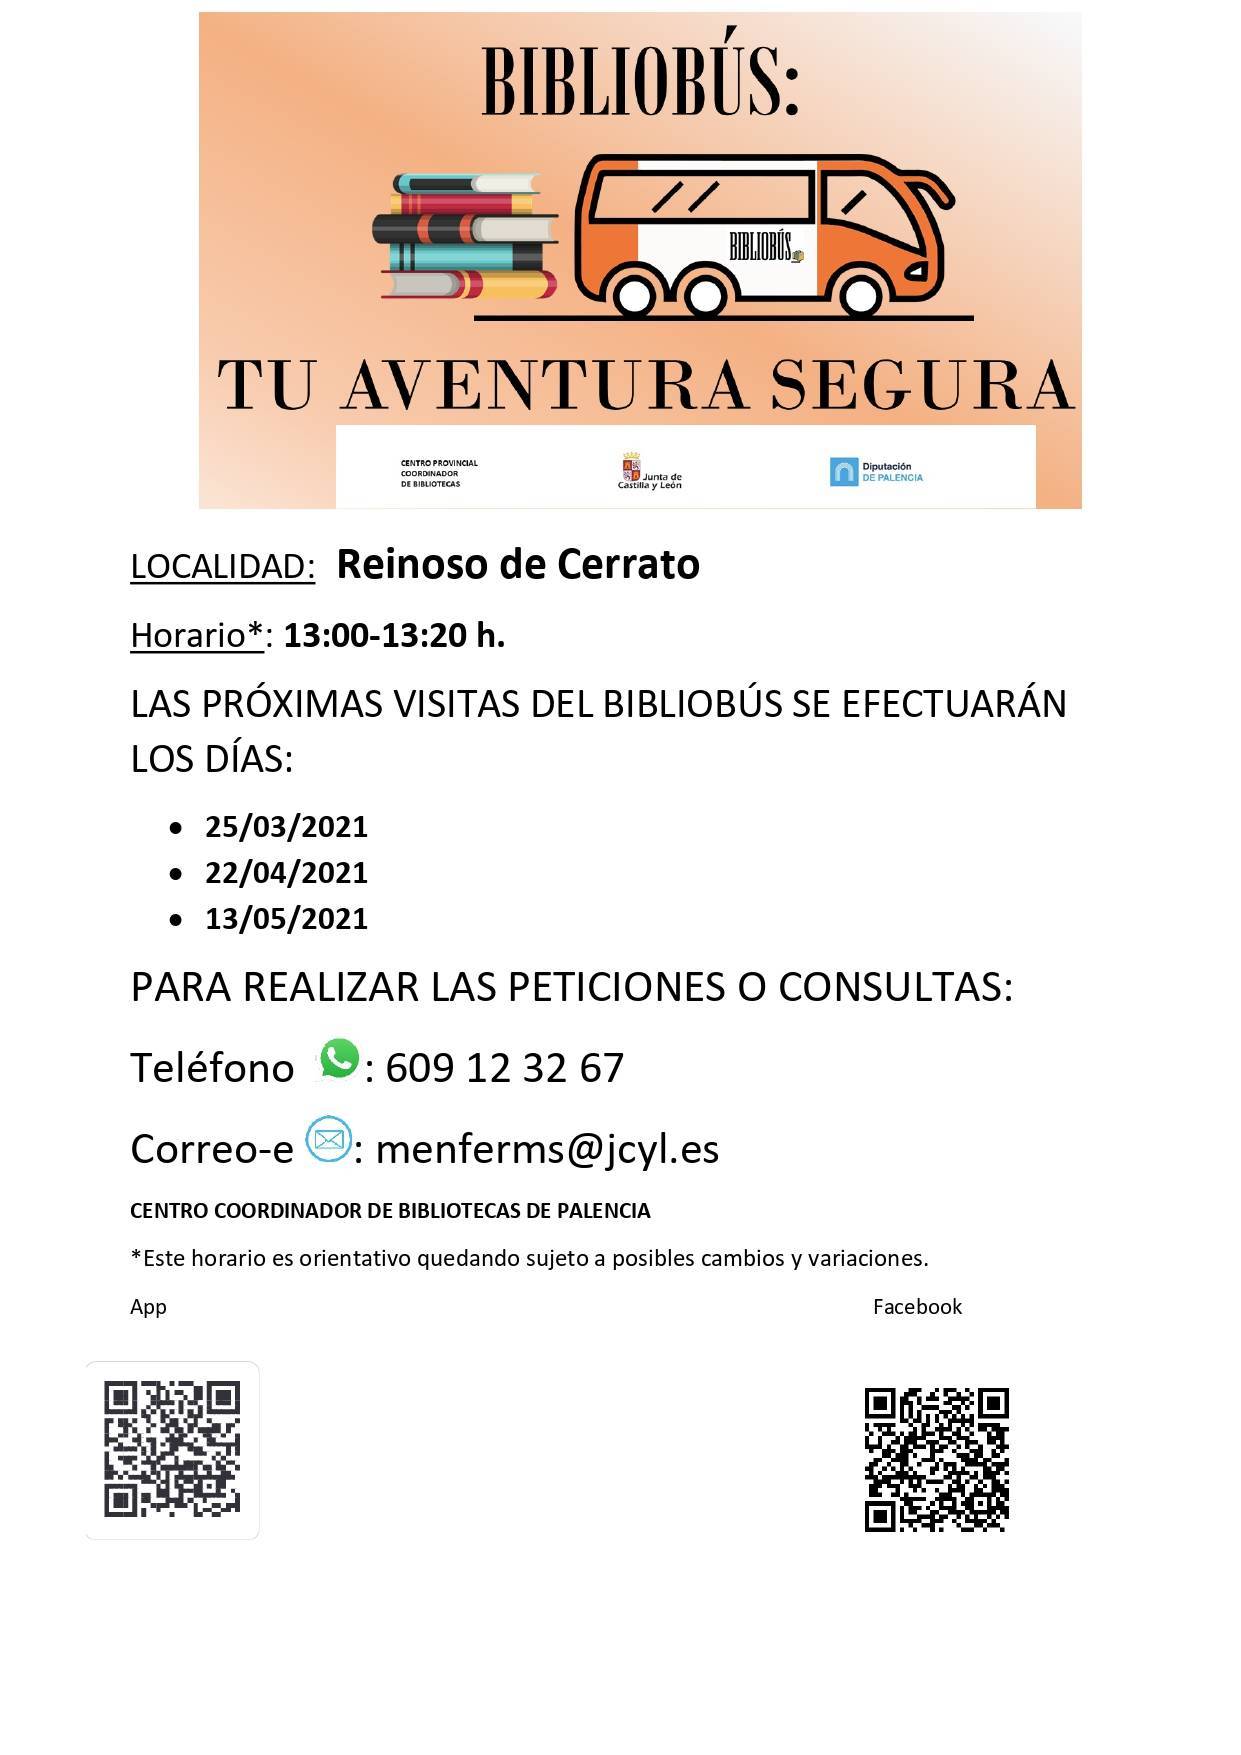 Bibliobús (2021) - Reinoso de Cerrato (Palencia)